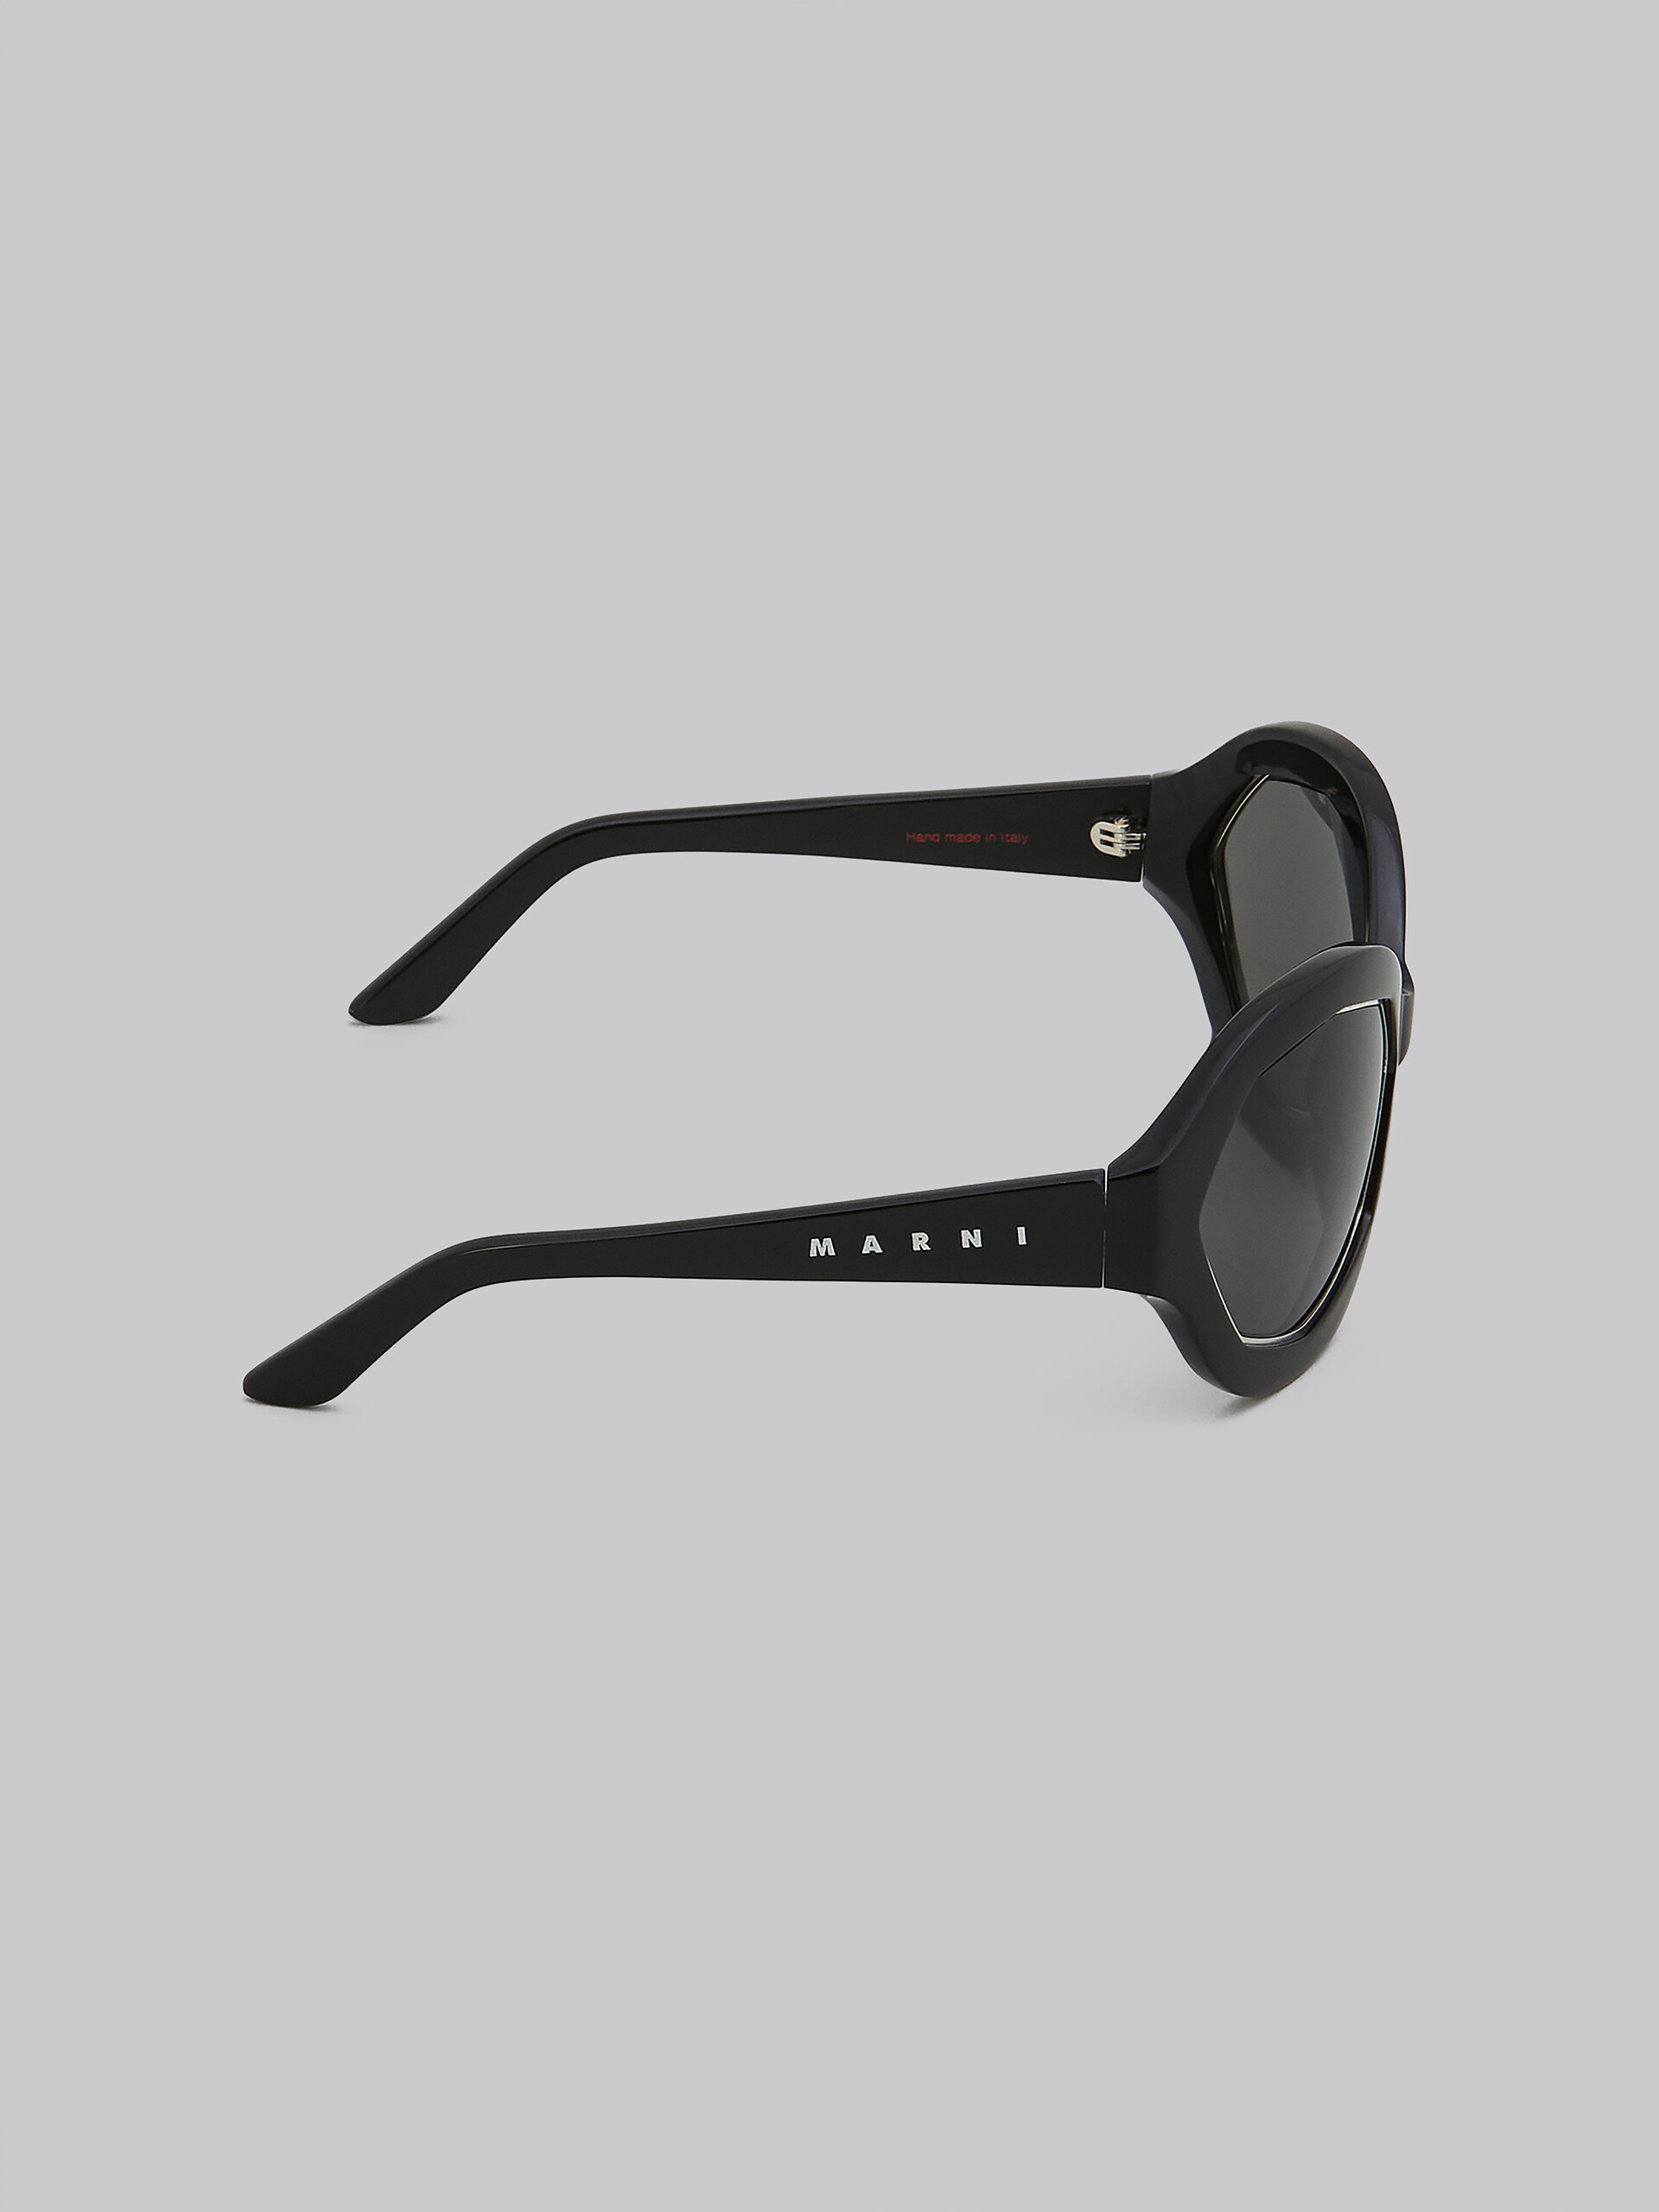 CUMULUS CLOUD black acetate sunglasses - Optical - Image 3